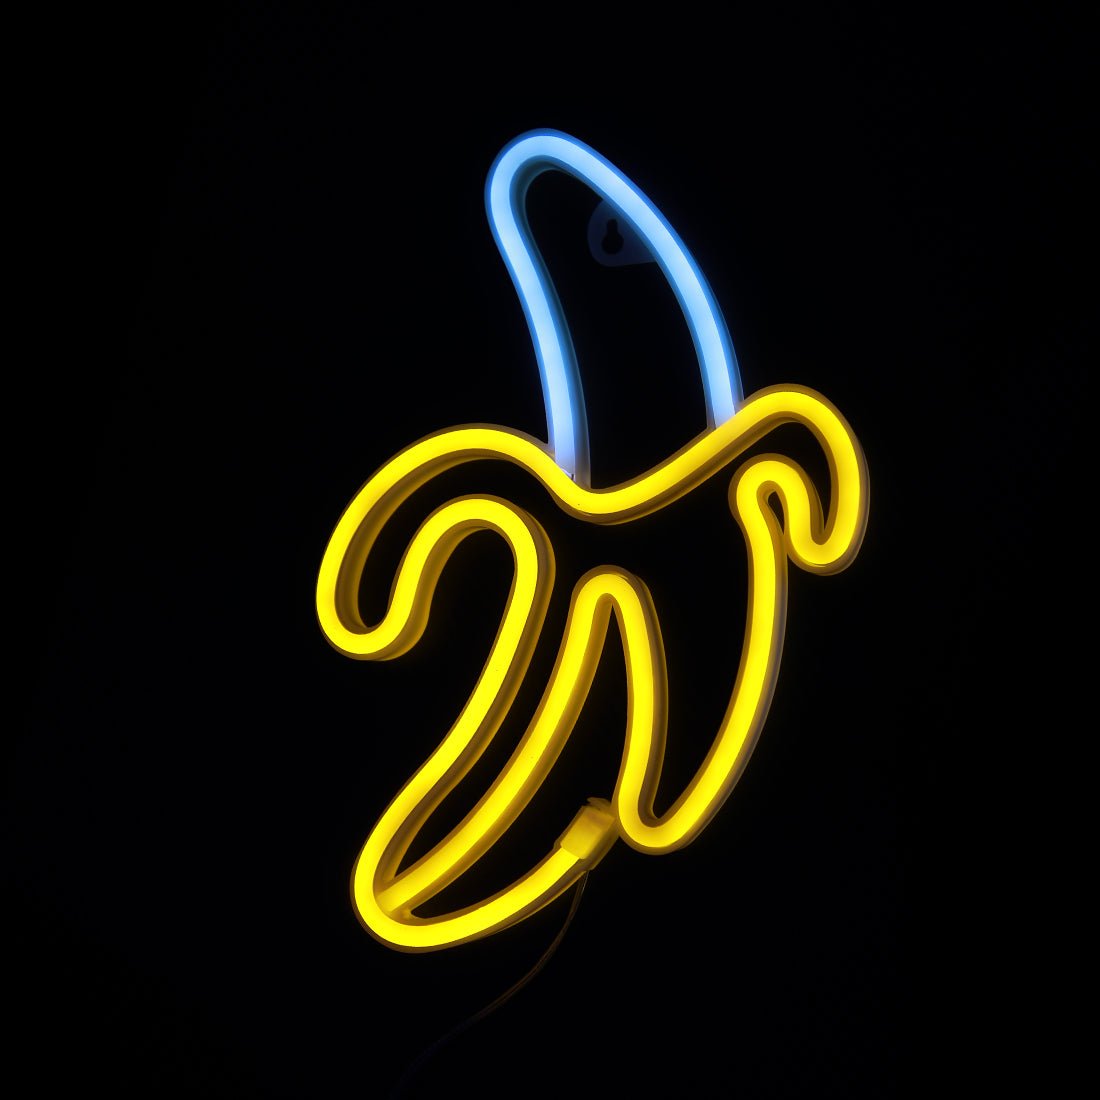 Led Neon Banana Shape - White & Yellow - إضاءة - Store 974 | ستور ٩٧٤